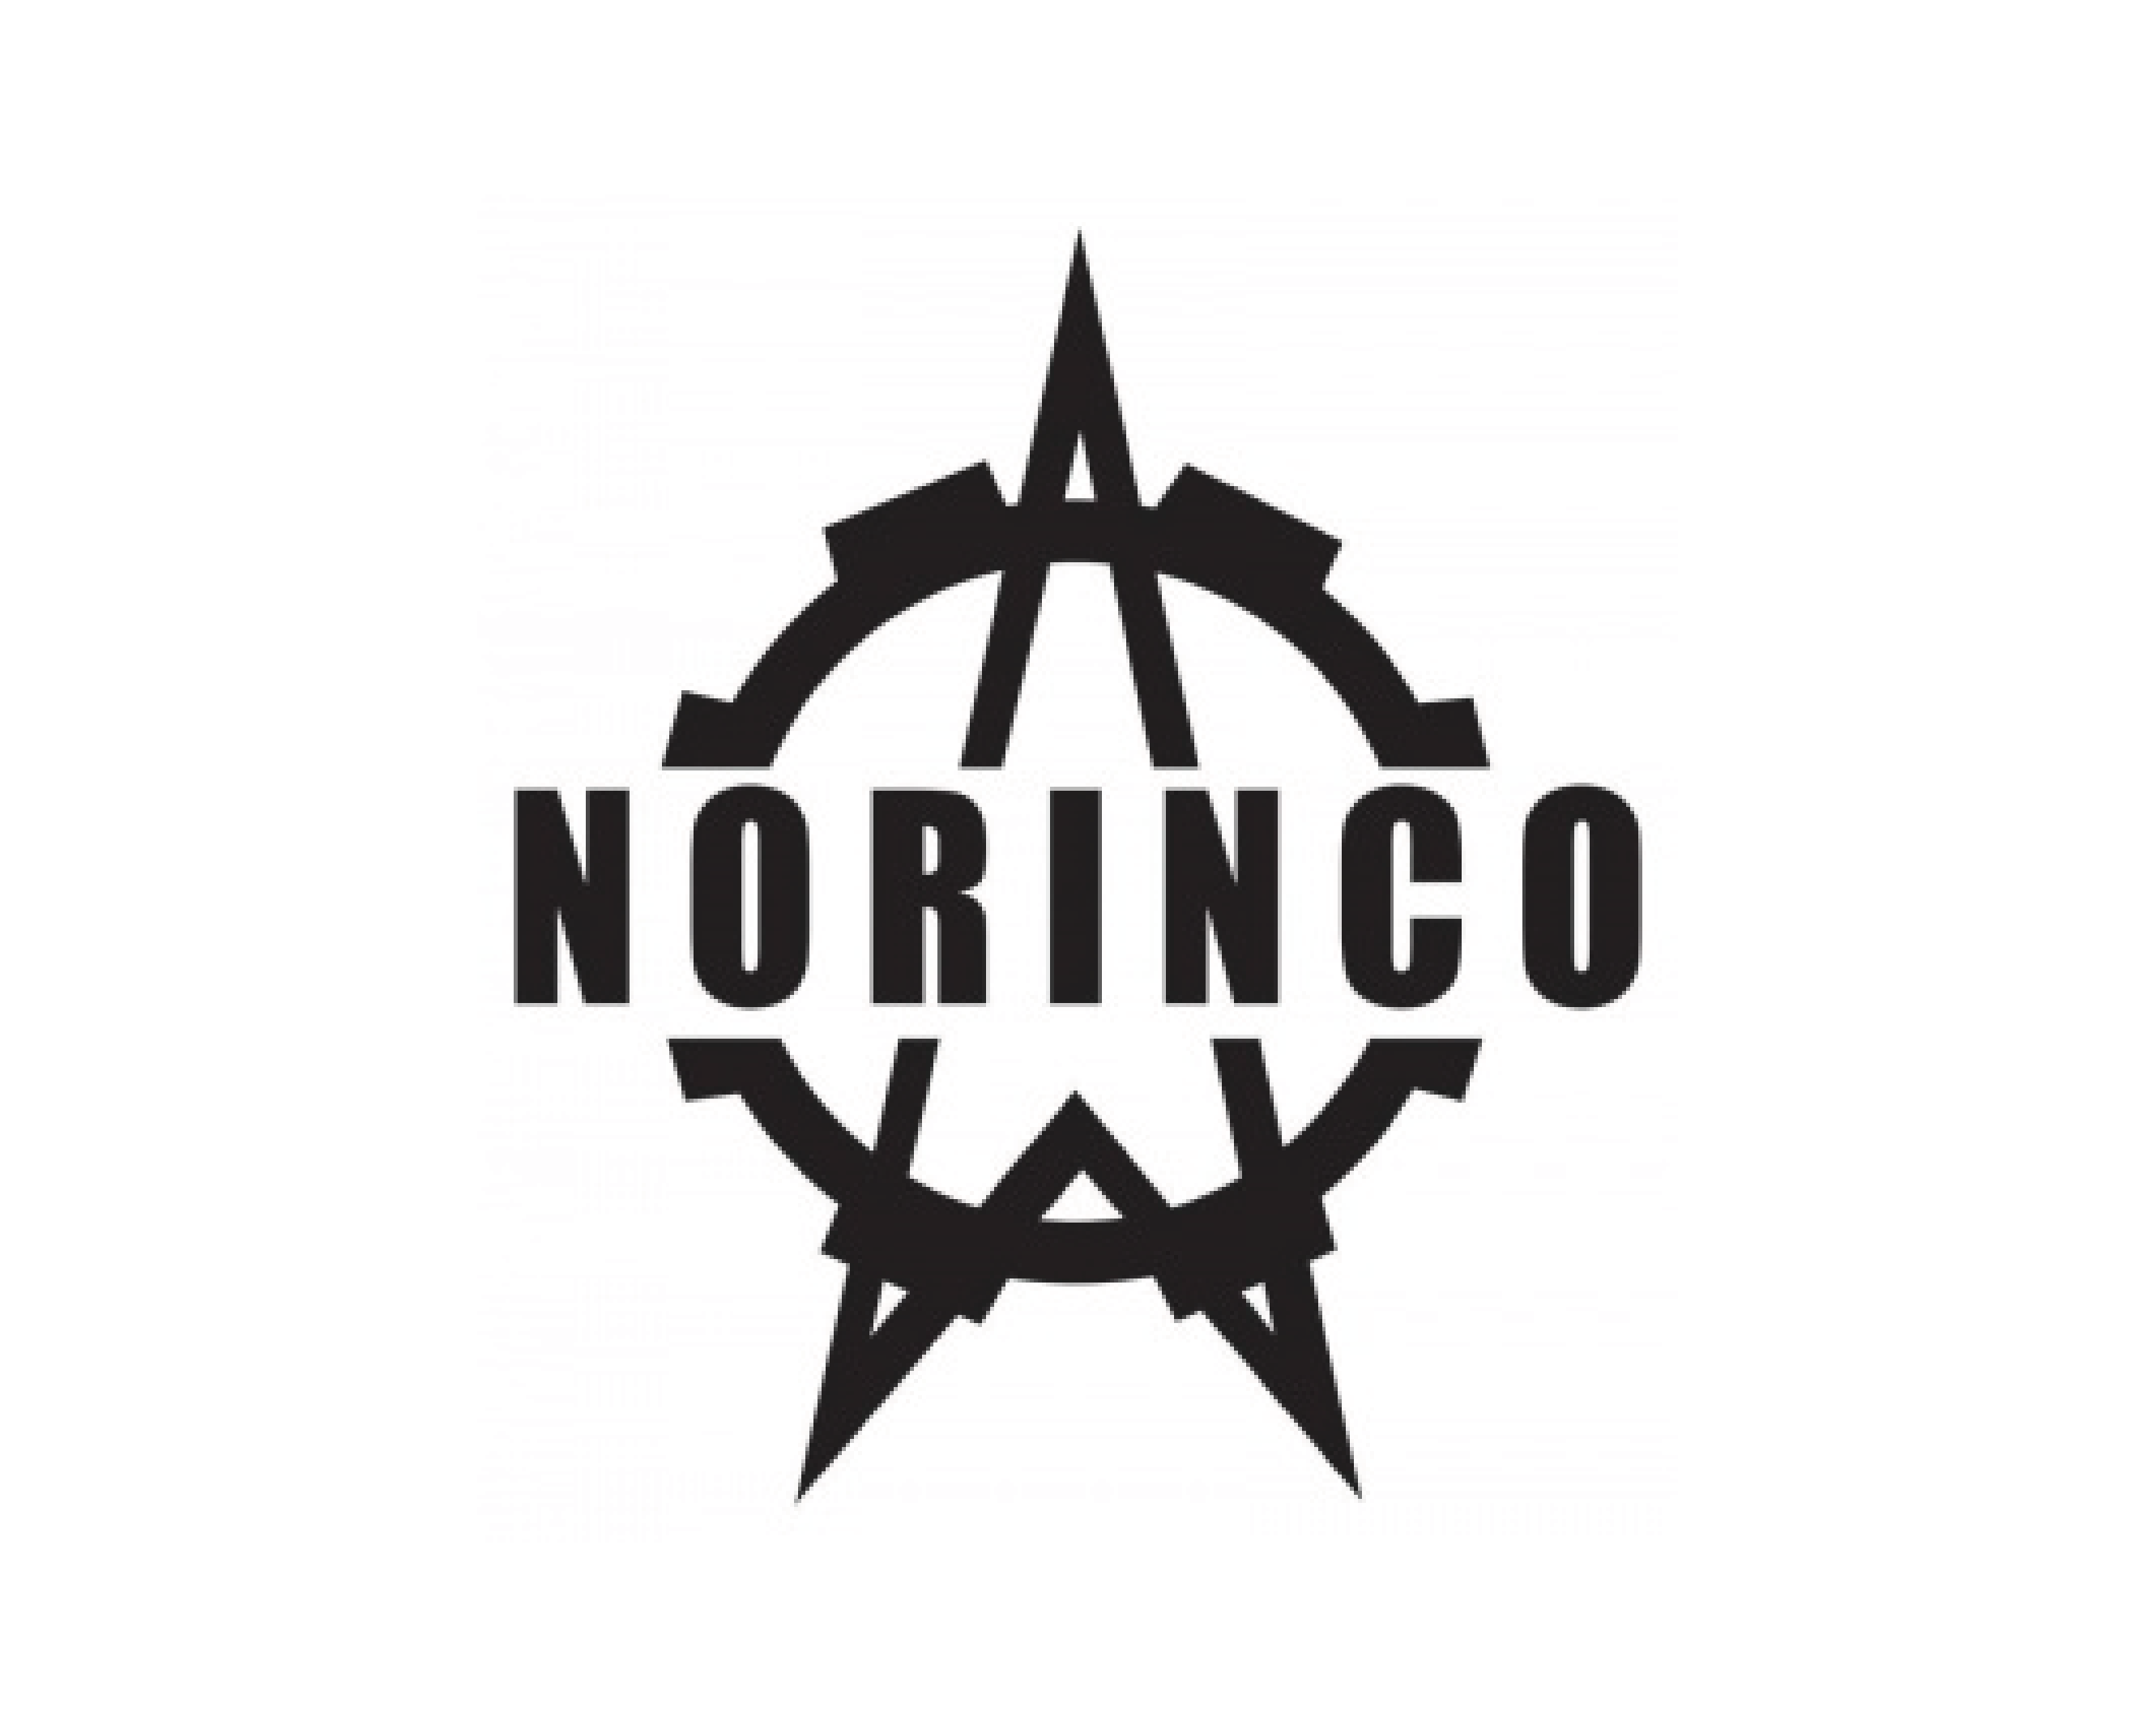 //centre-tir.ch/wp-content/uploads/2017/10/logo-norinco.png